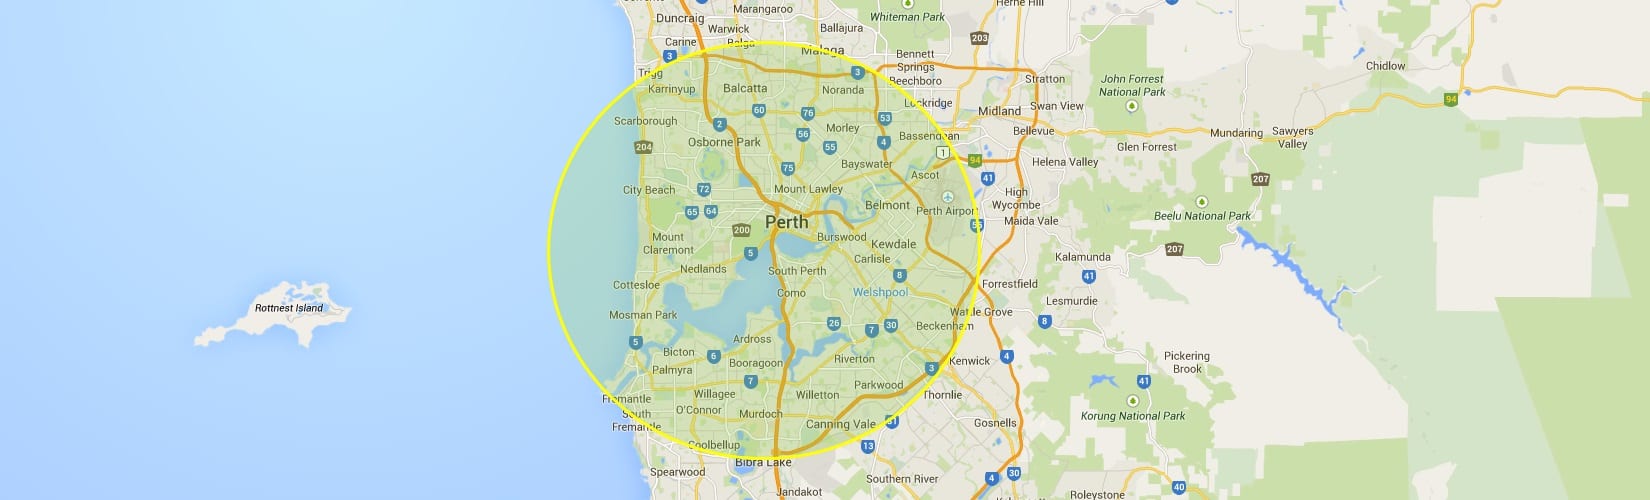 Perth Business internet Fixed Wireless Broadband Providers